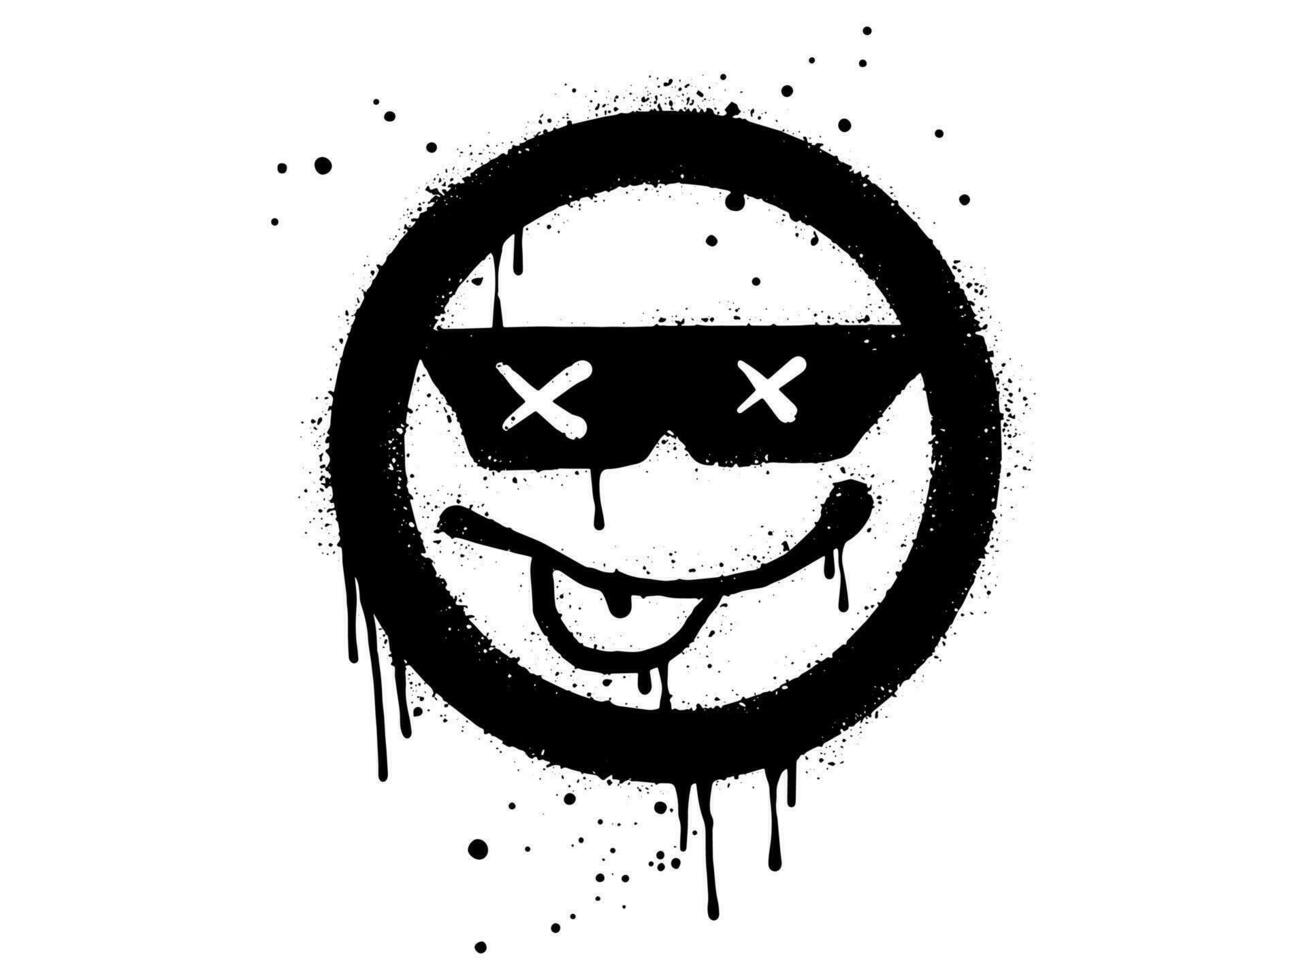 glimlachen gezicht en tong uit emoticon karakter met zonnebril. verstuiven geschilderd graffiti glimlach gezicht in zwart over- wit. geïsoleerd Aan wit achtergrond. vector illustratie